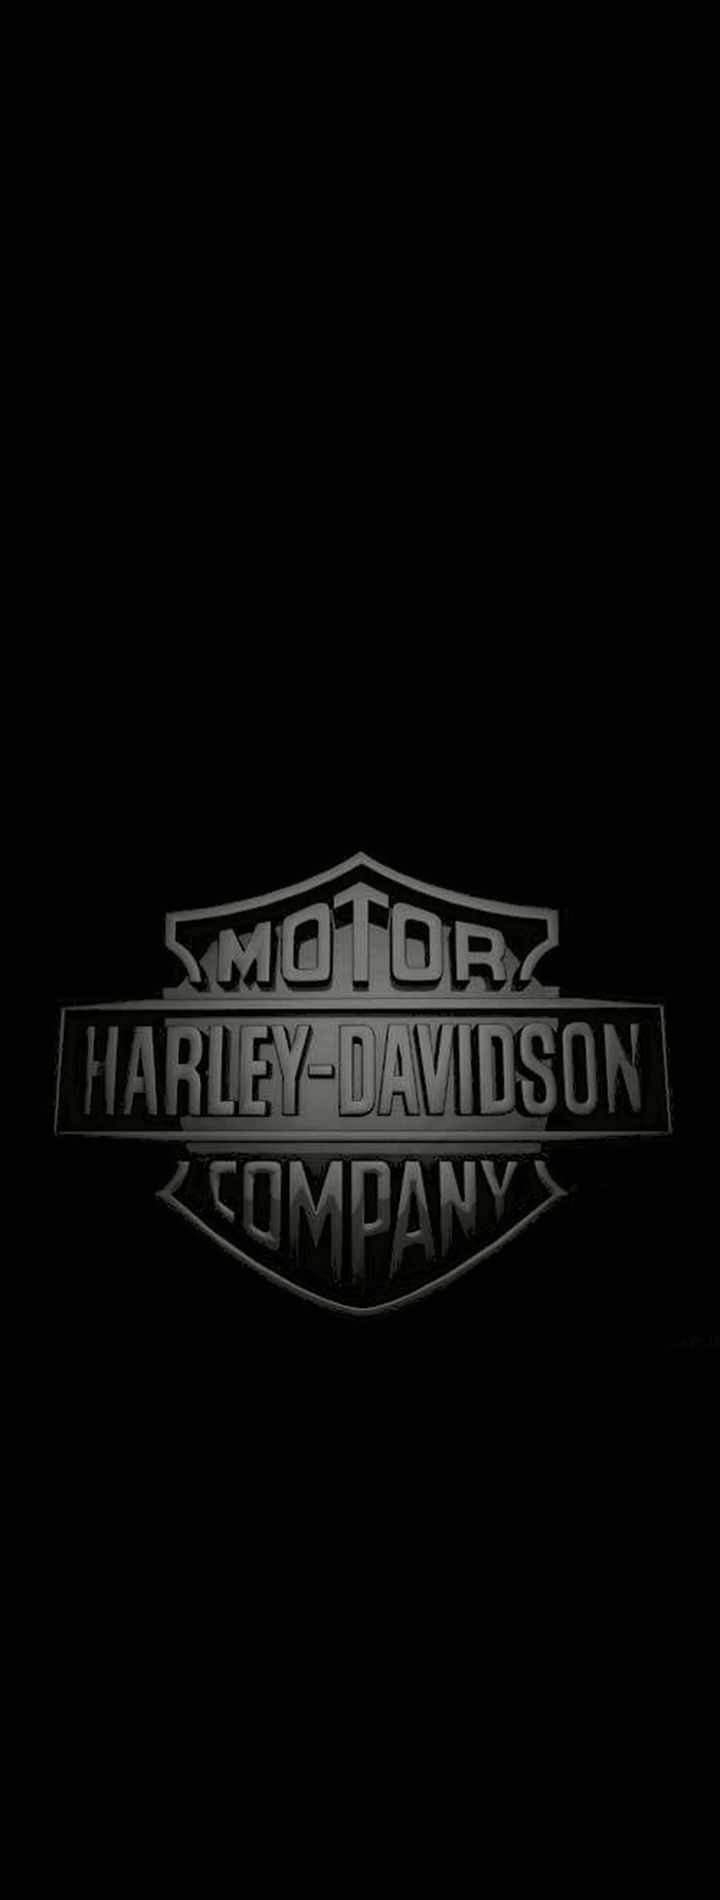 Harley Phone Wallpaper. Harley davidson wallpaper, Harley davidson stickers, Harley davidson art